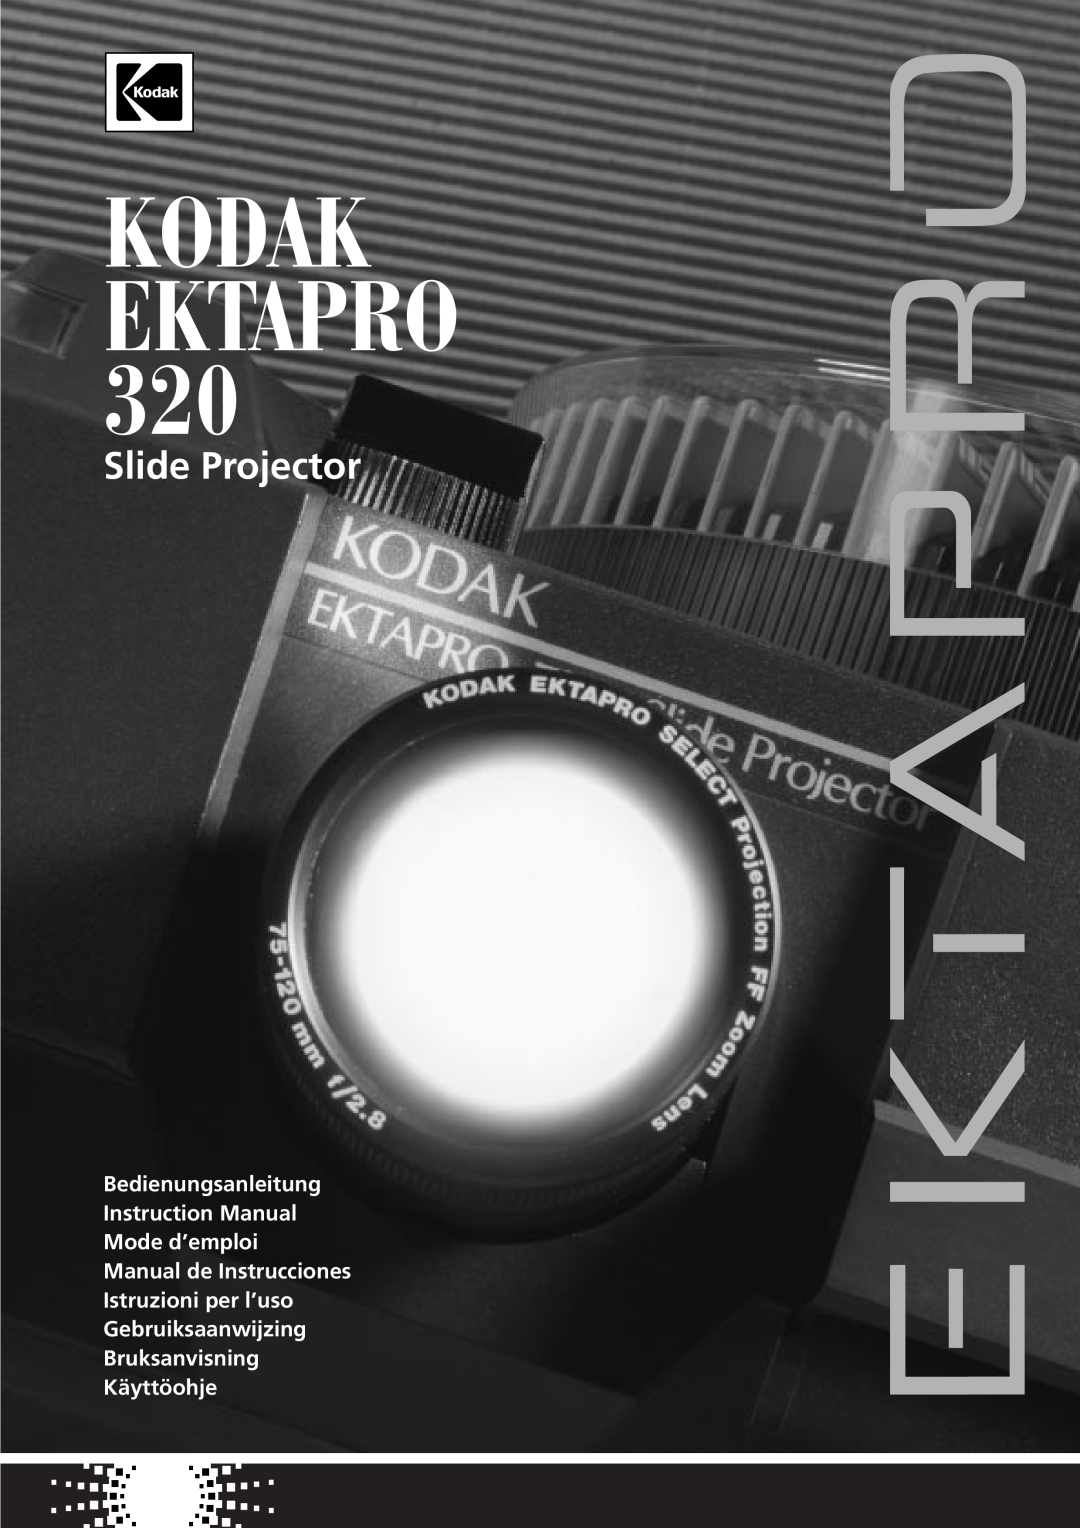 Kodak EKTAPRO instruction manual Kodak Ektapro, Slide Projector 